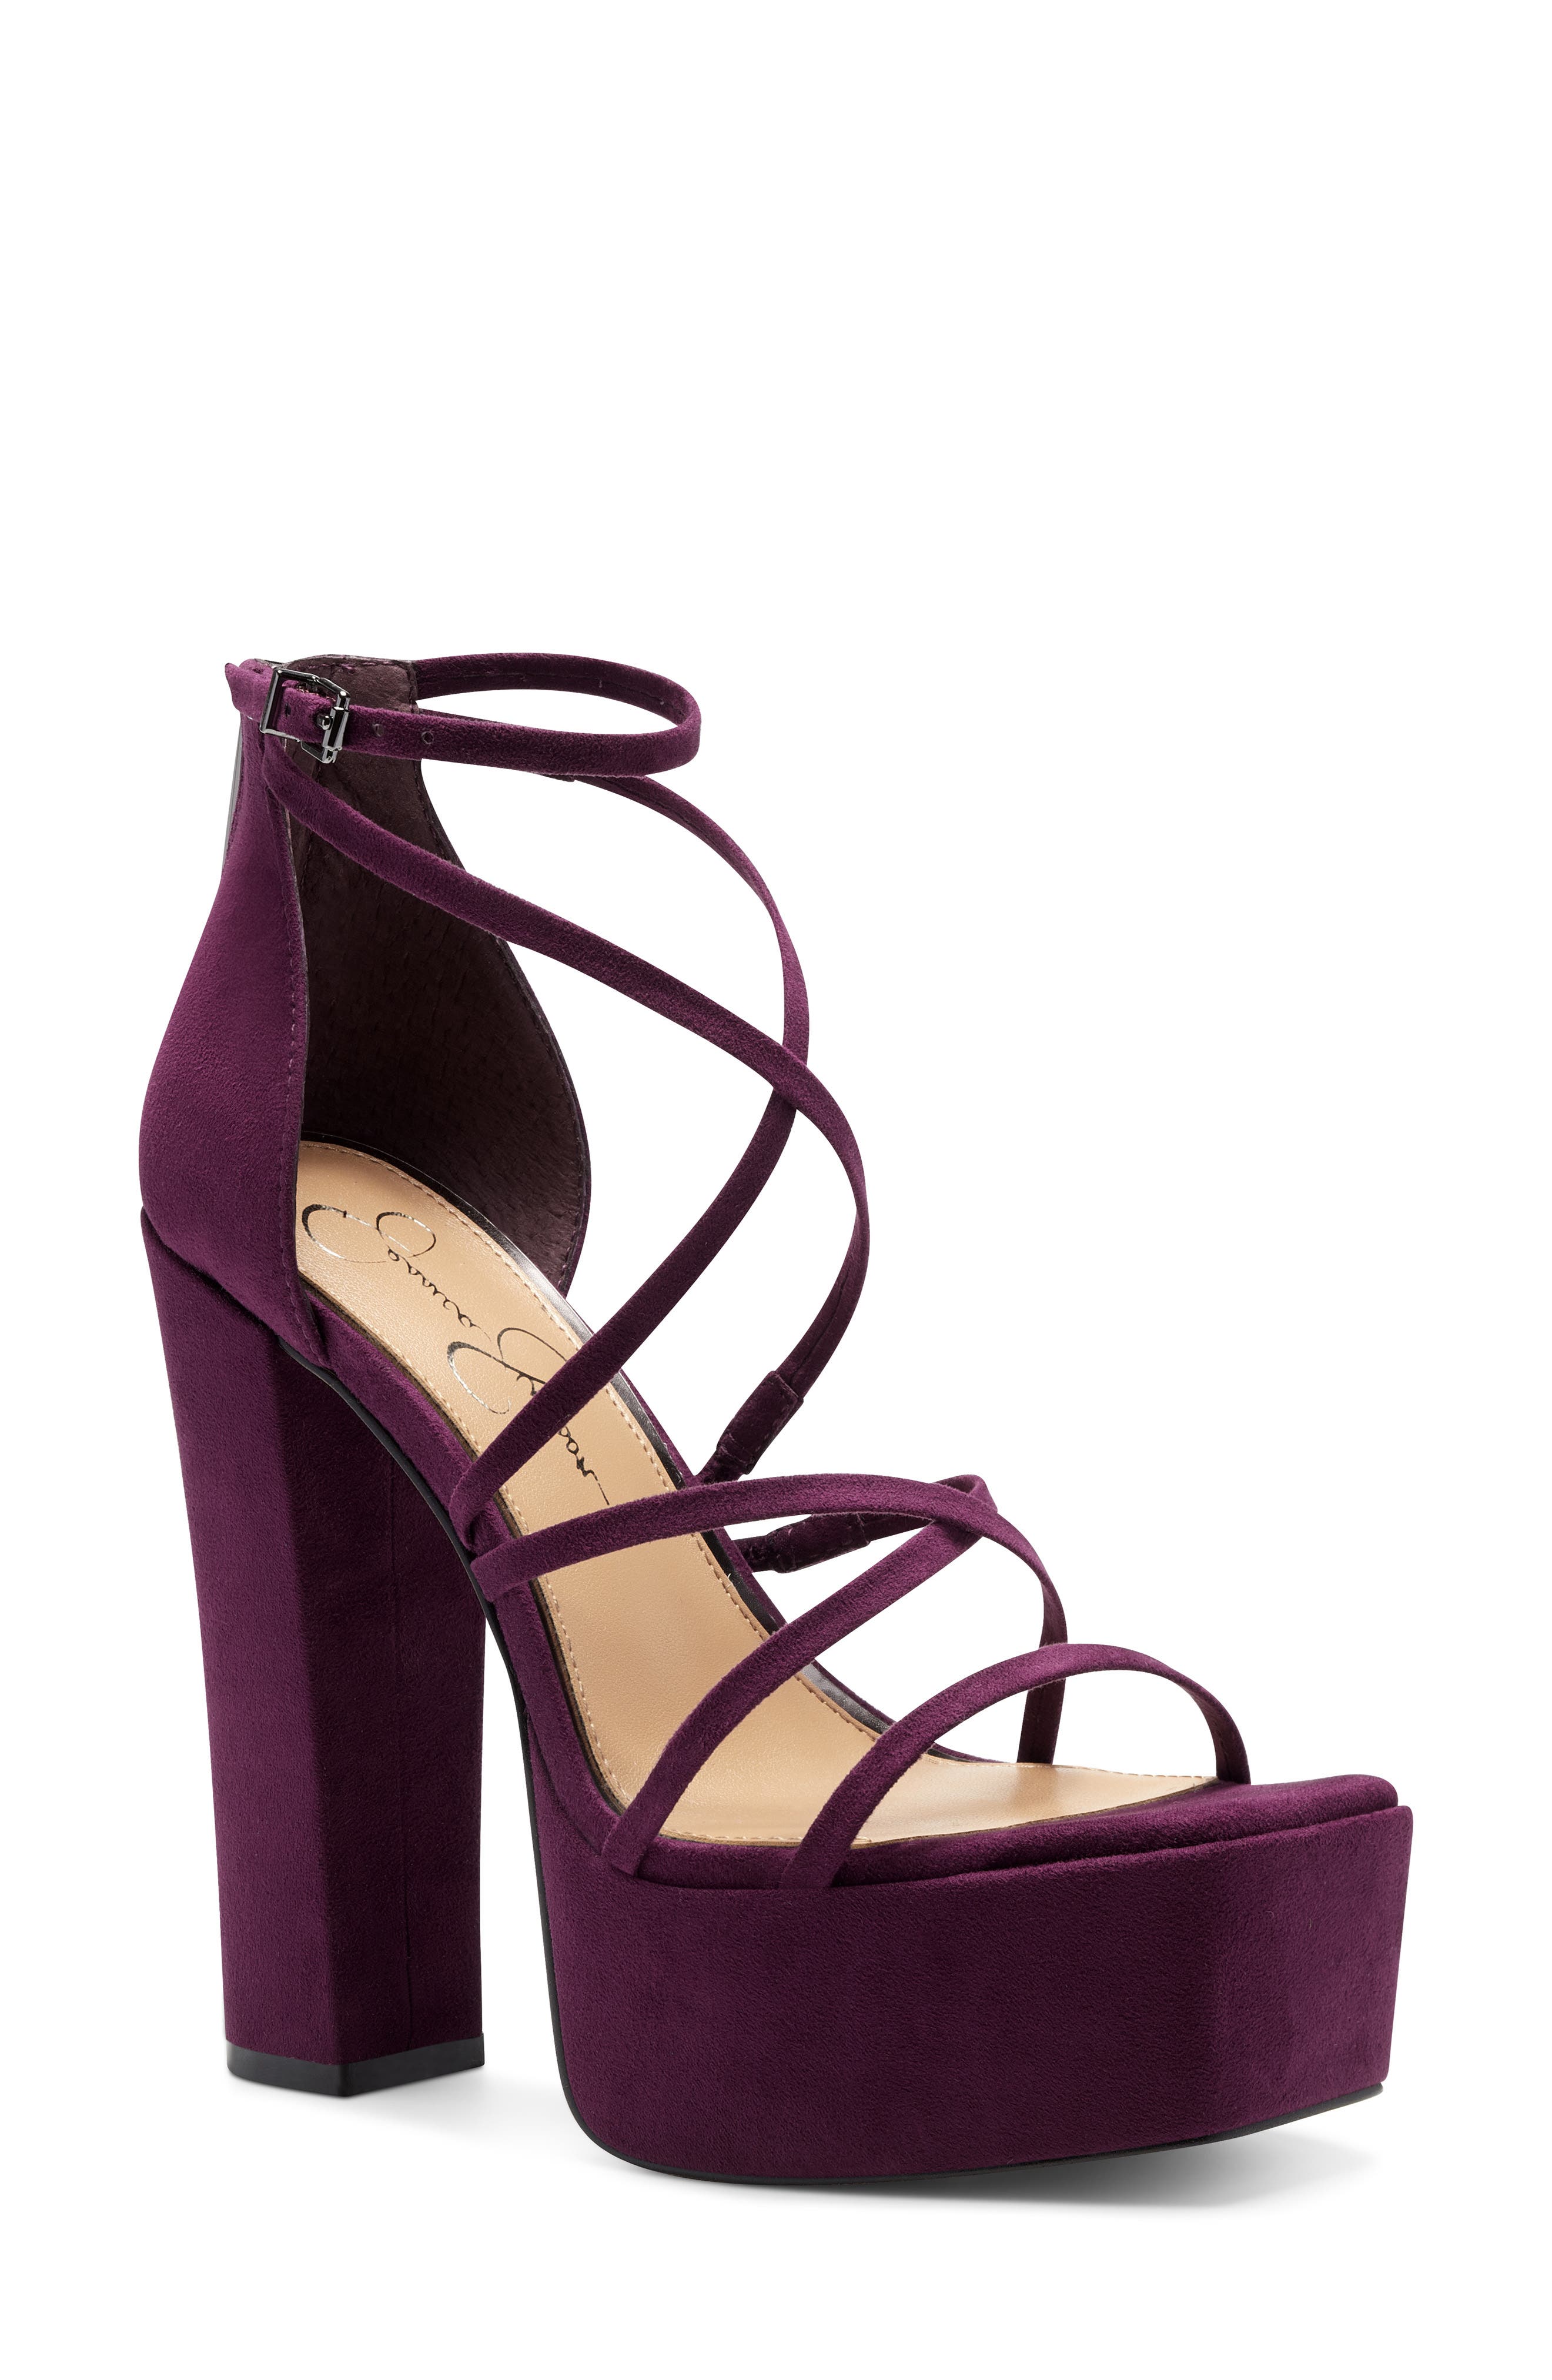 nordstrom purple shoes